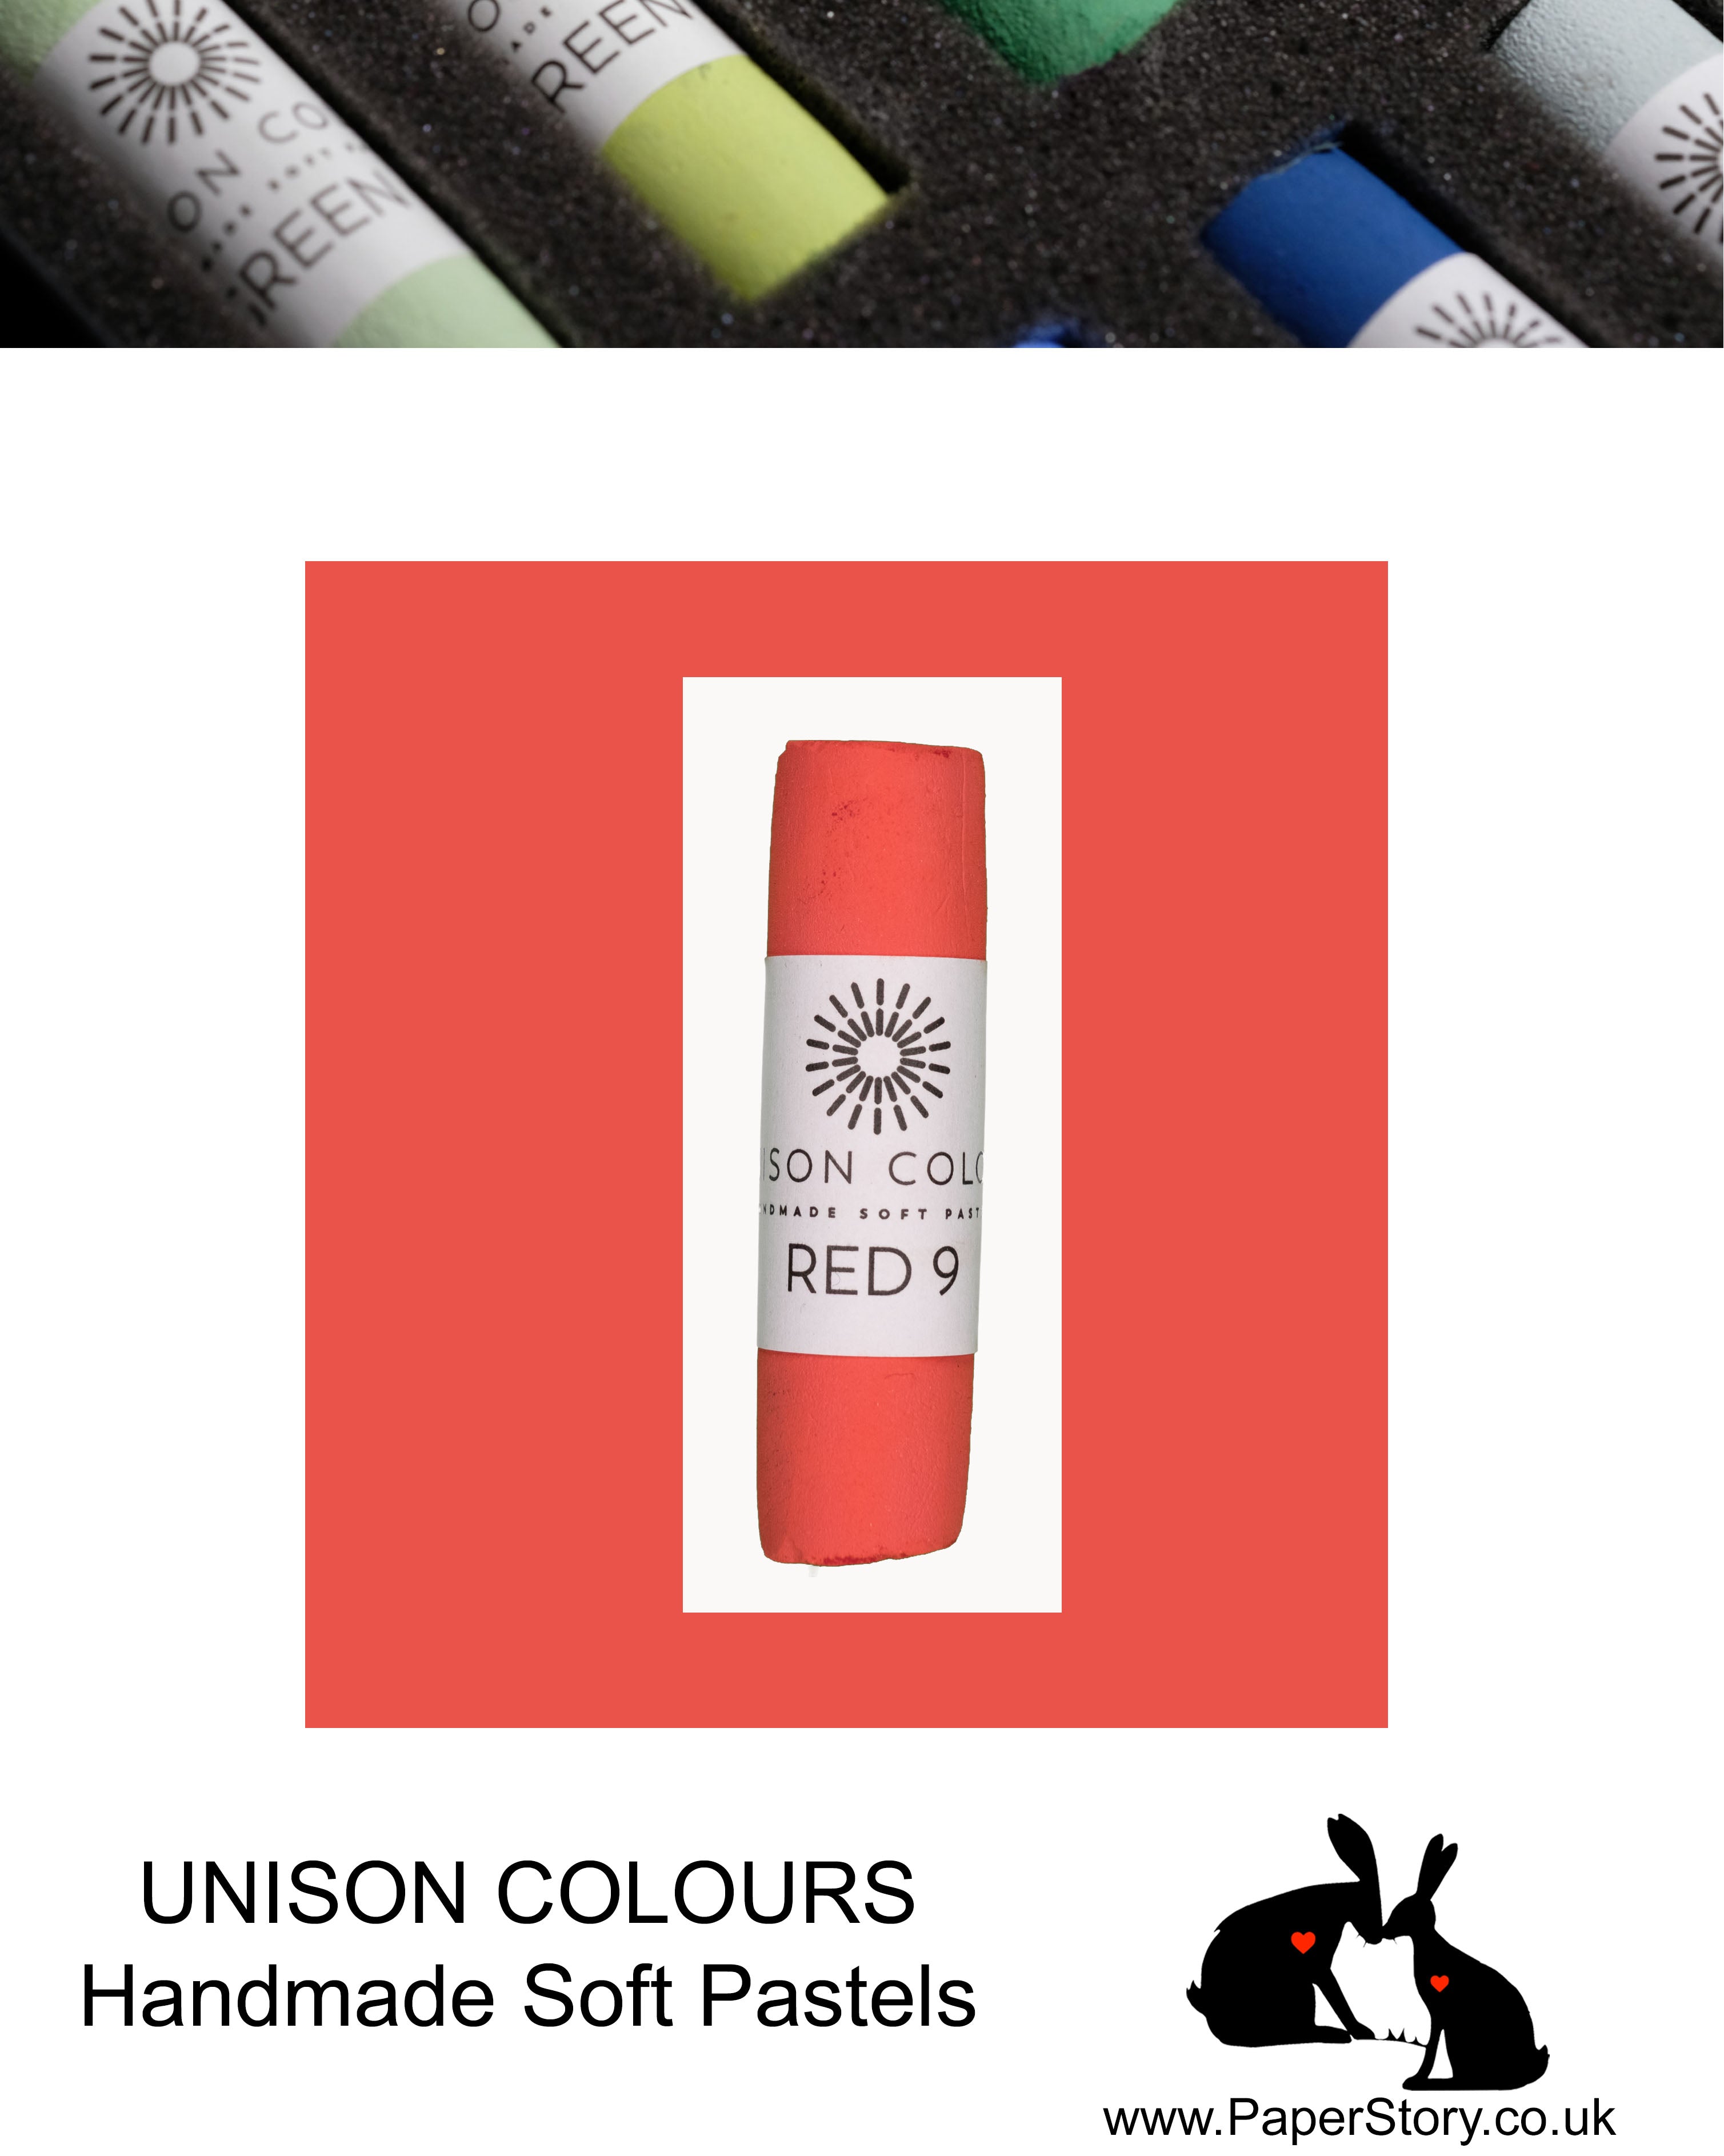 Unison Colour Handmade Soft Pastels Red 9 - Size Regular